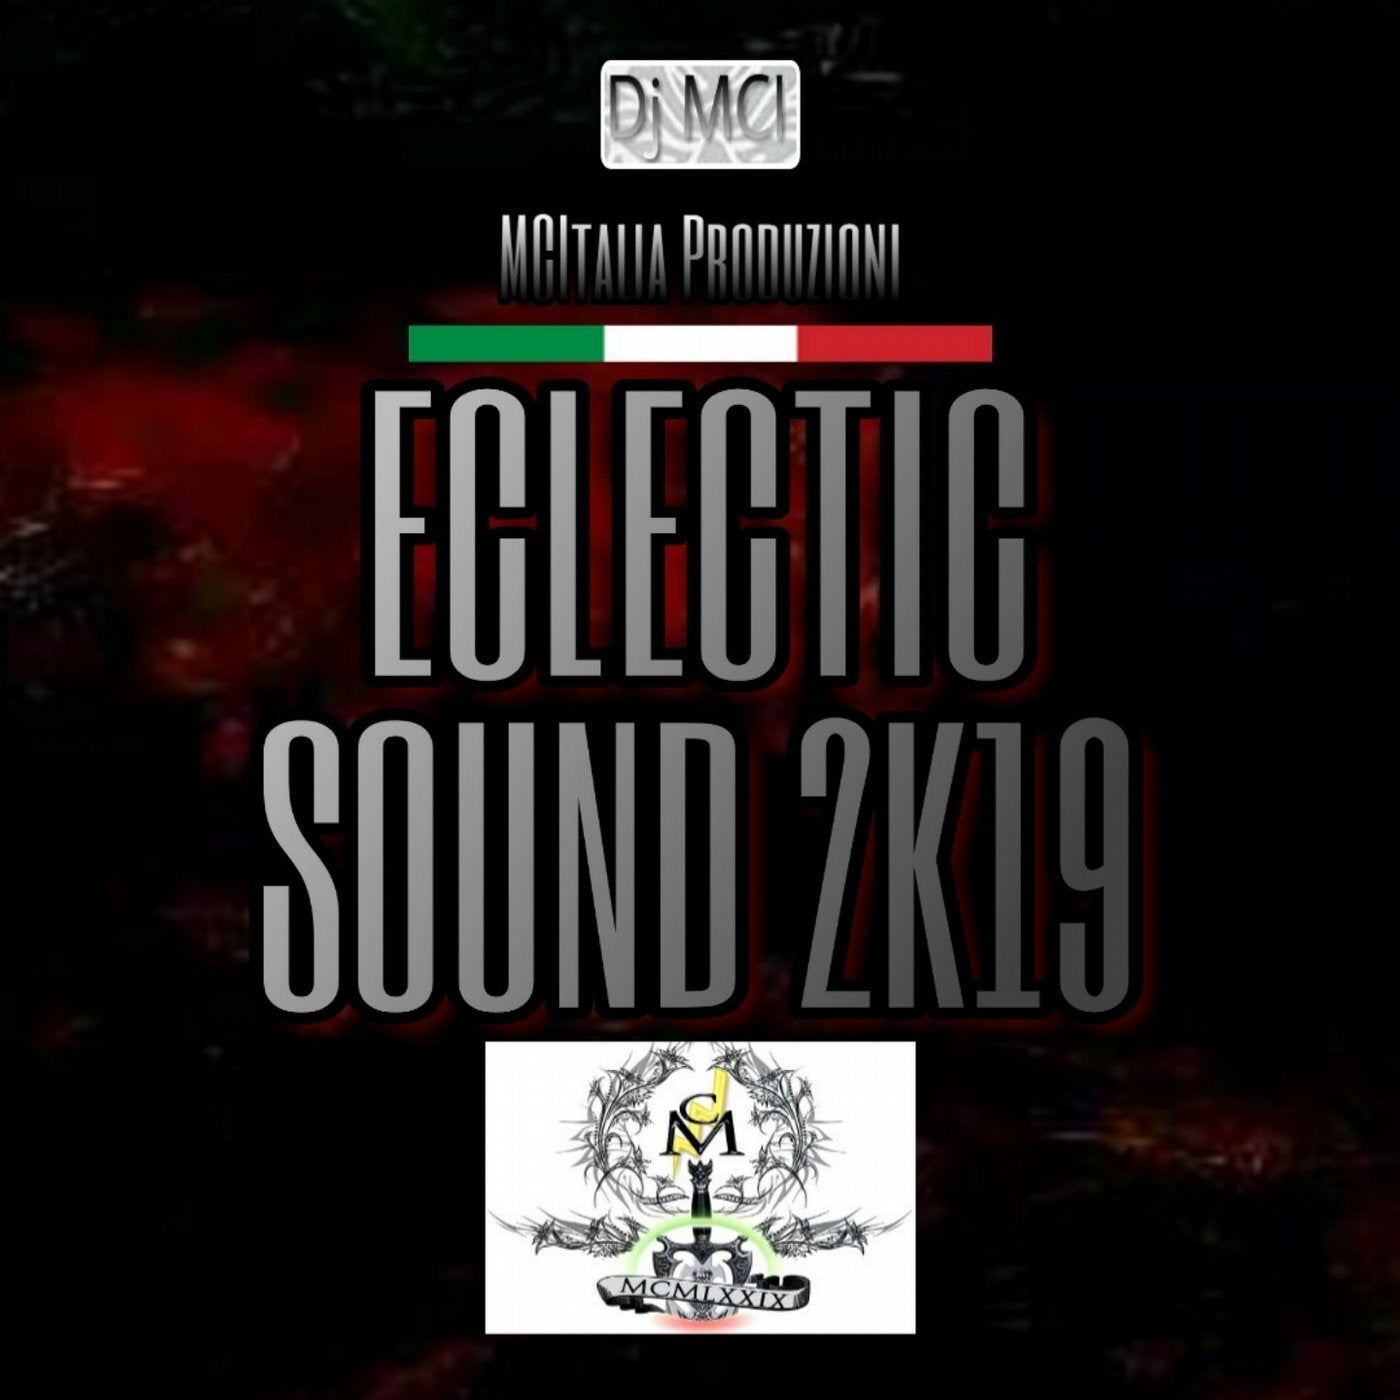 ECLECTIC SOUND 2K19 (MCItalia Production)